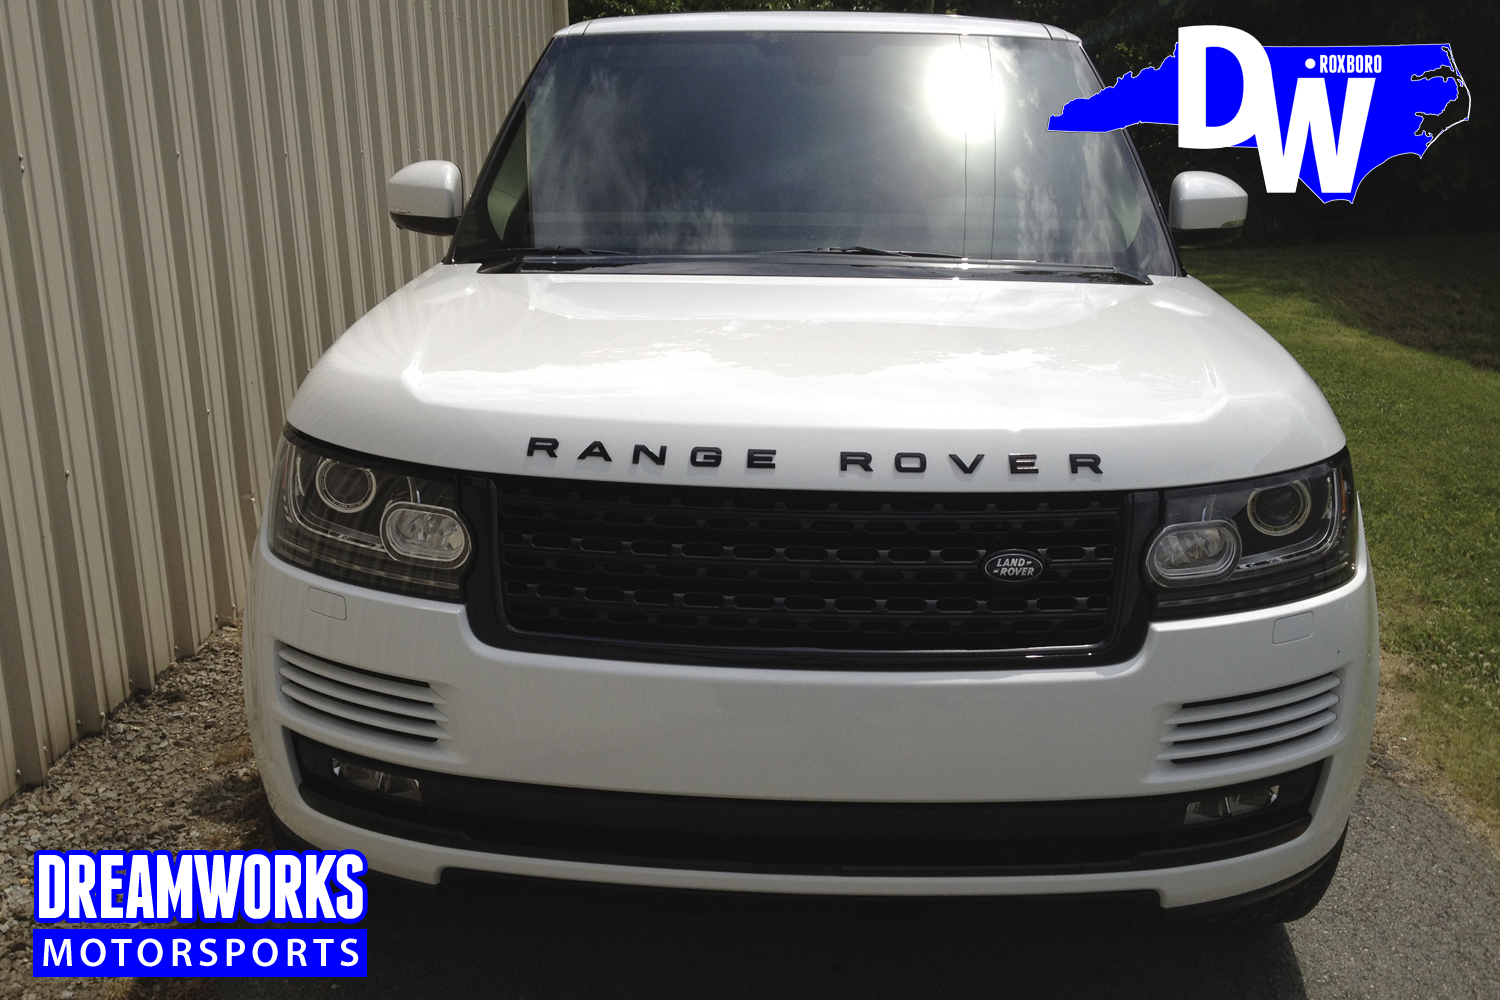 Antawn-Jamison-Range-Rover-By-Dreamworks-Motorsports-7.jpg